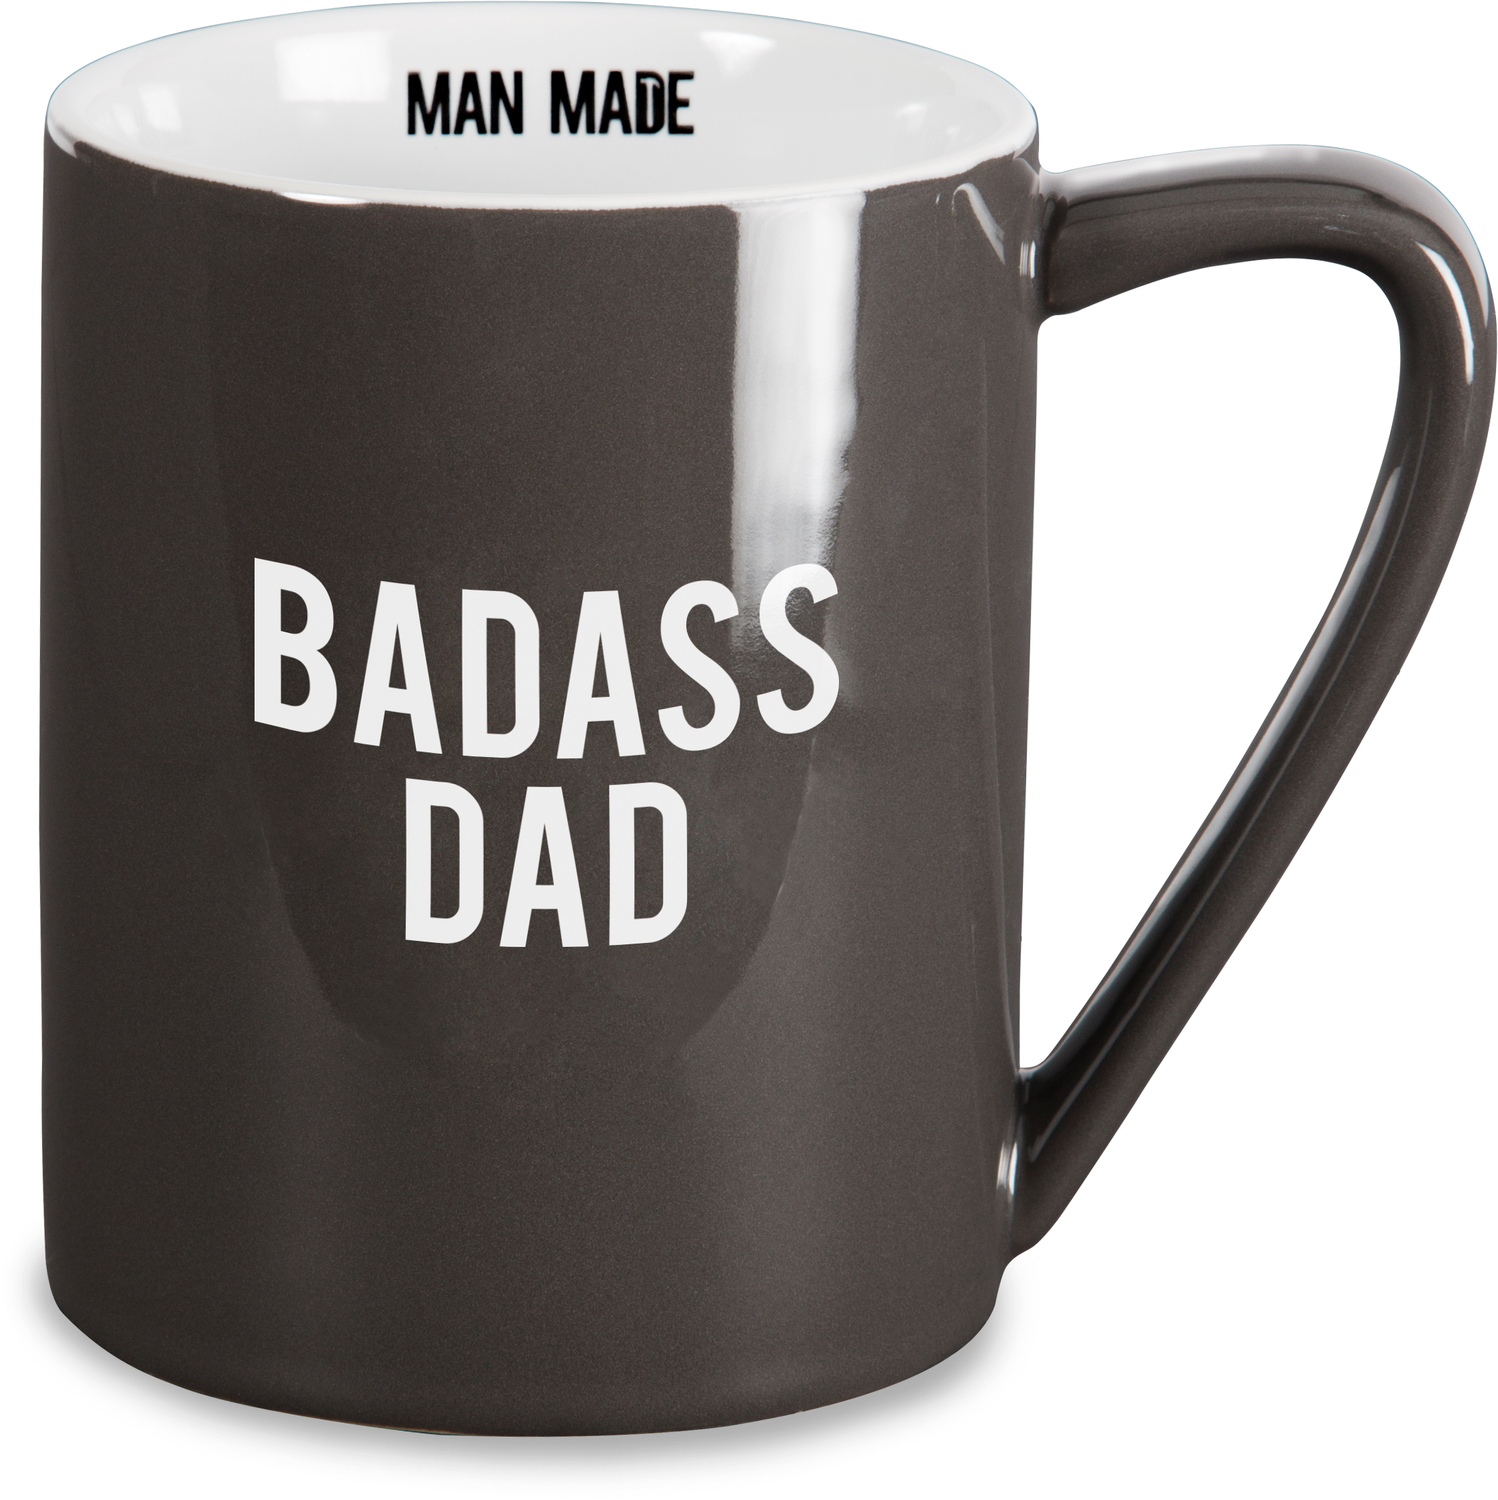 Badass Dad by Man Made - Badass Dad - 18 oz Mug